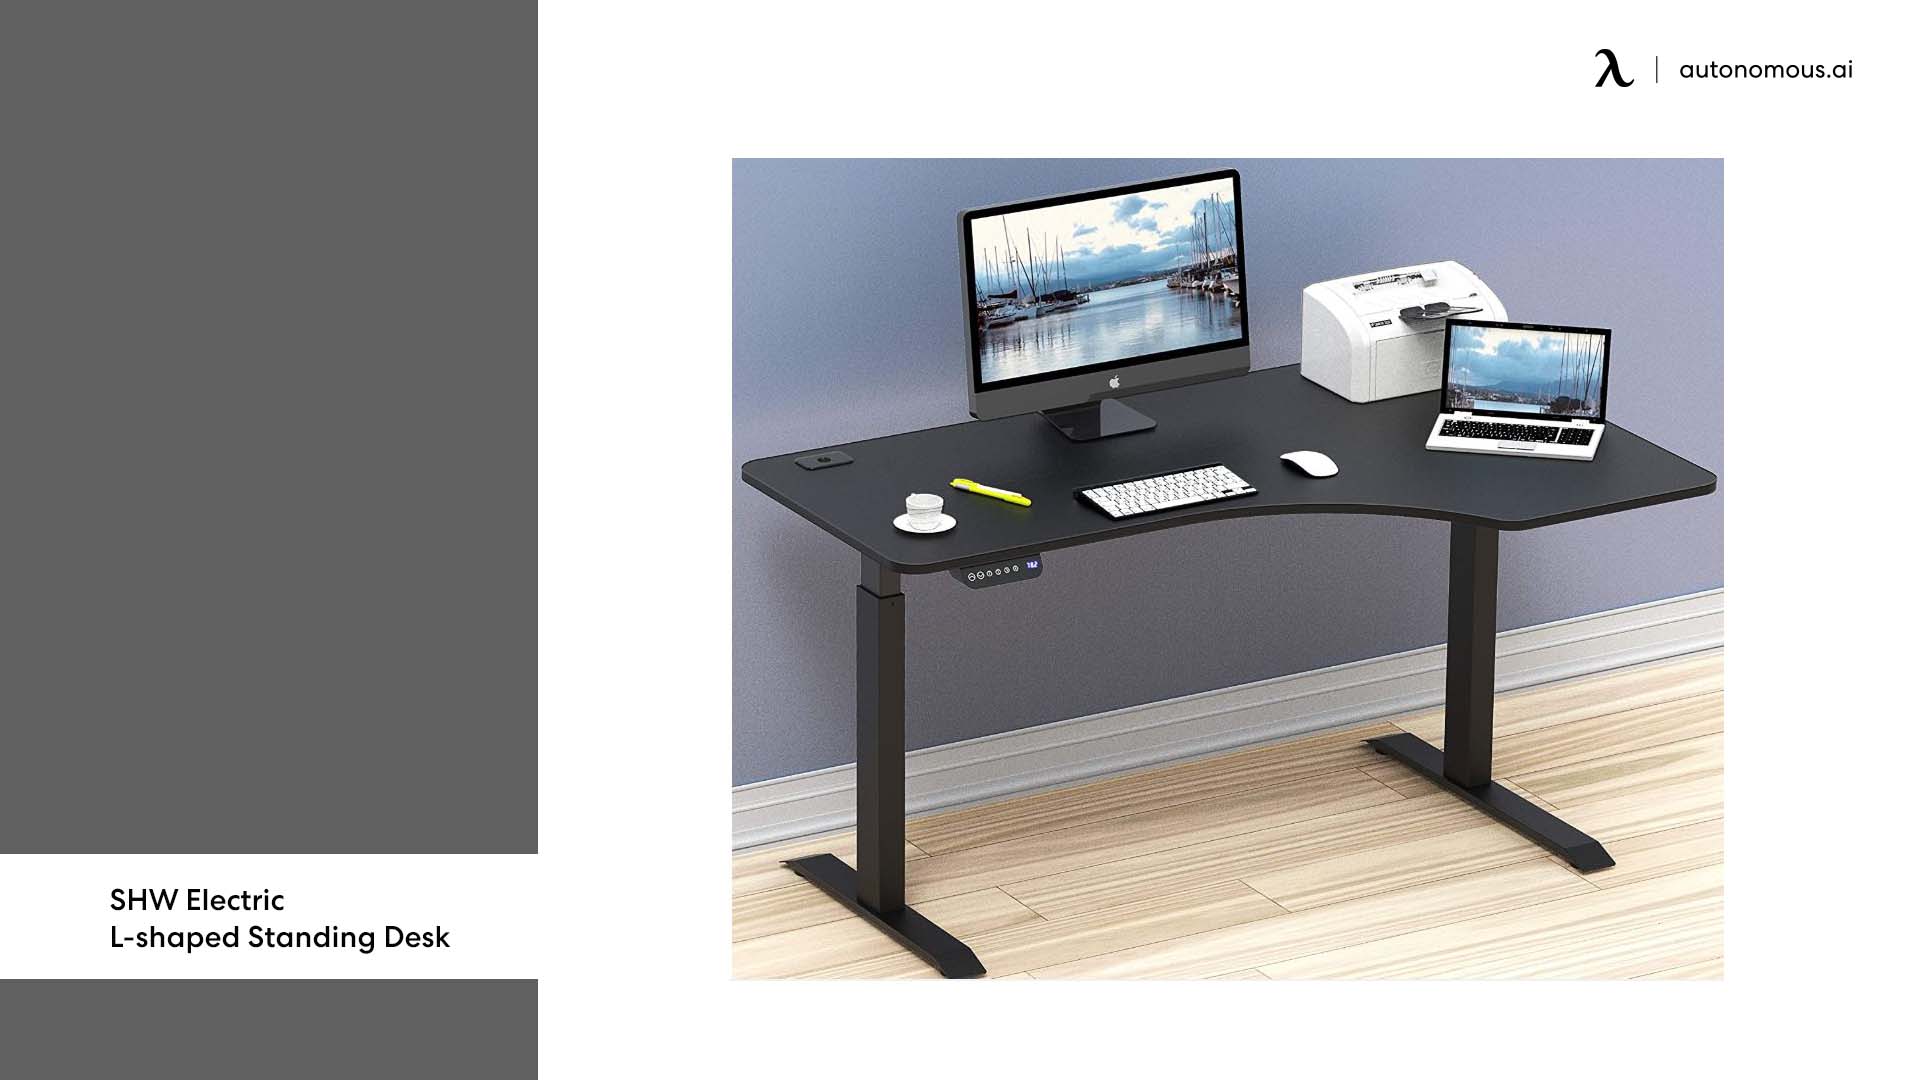 L-shaped Standing Desk